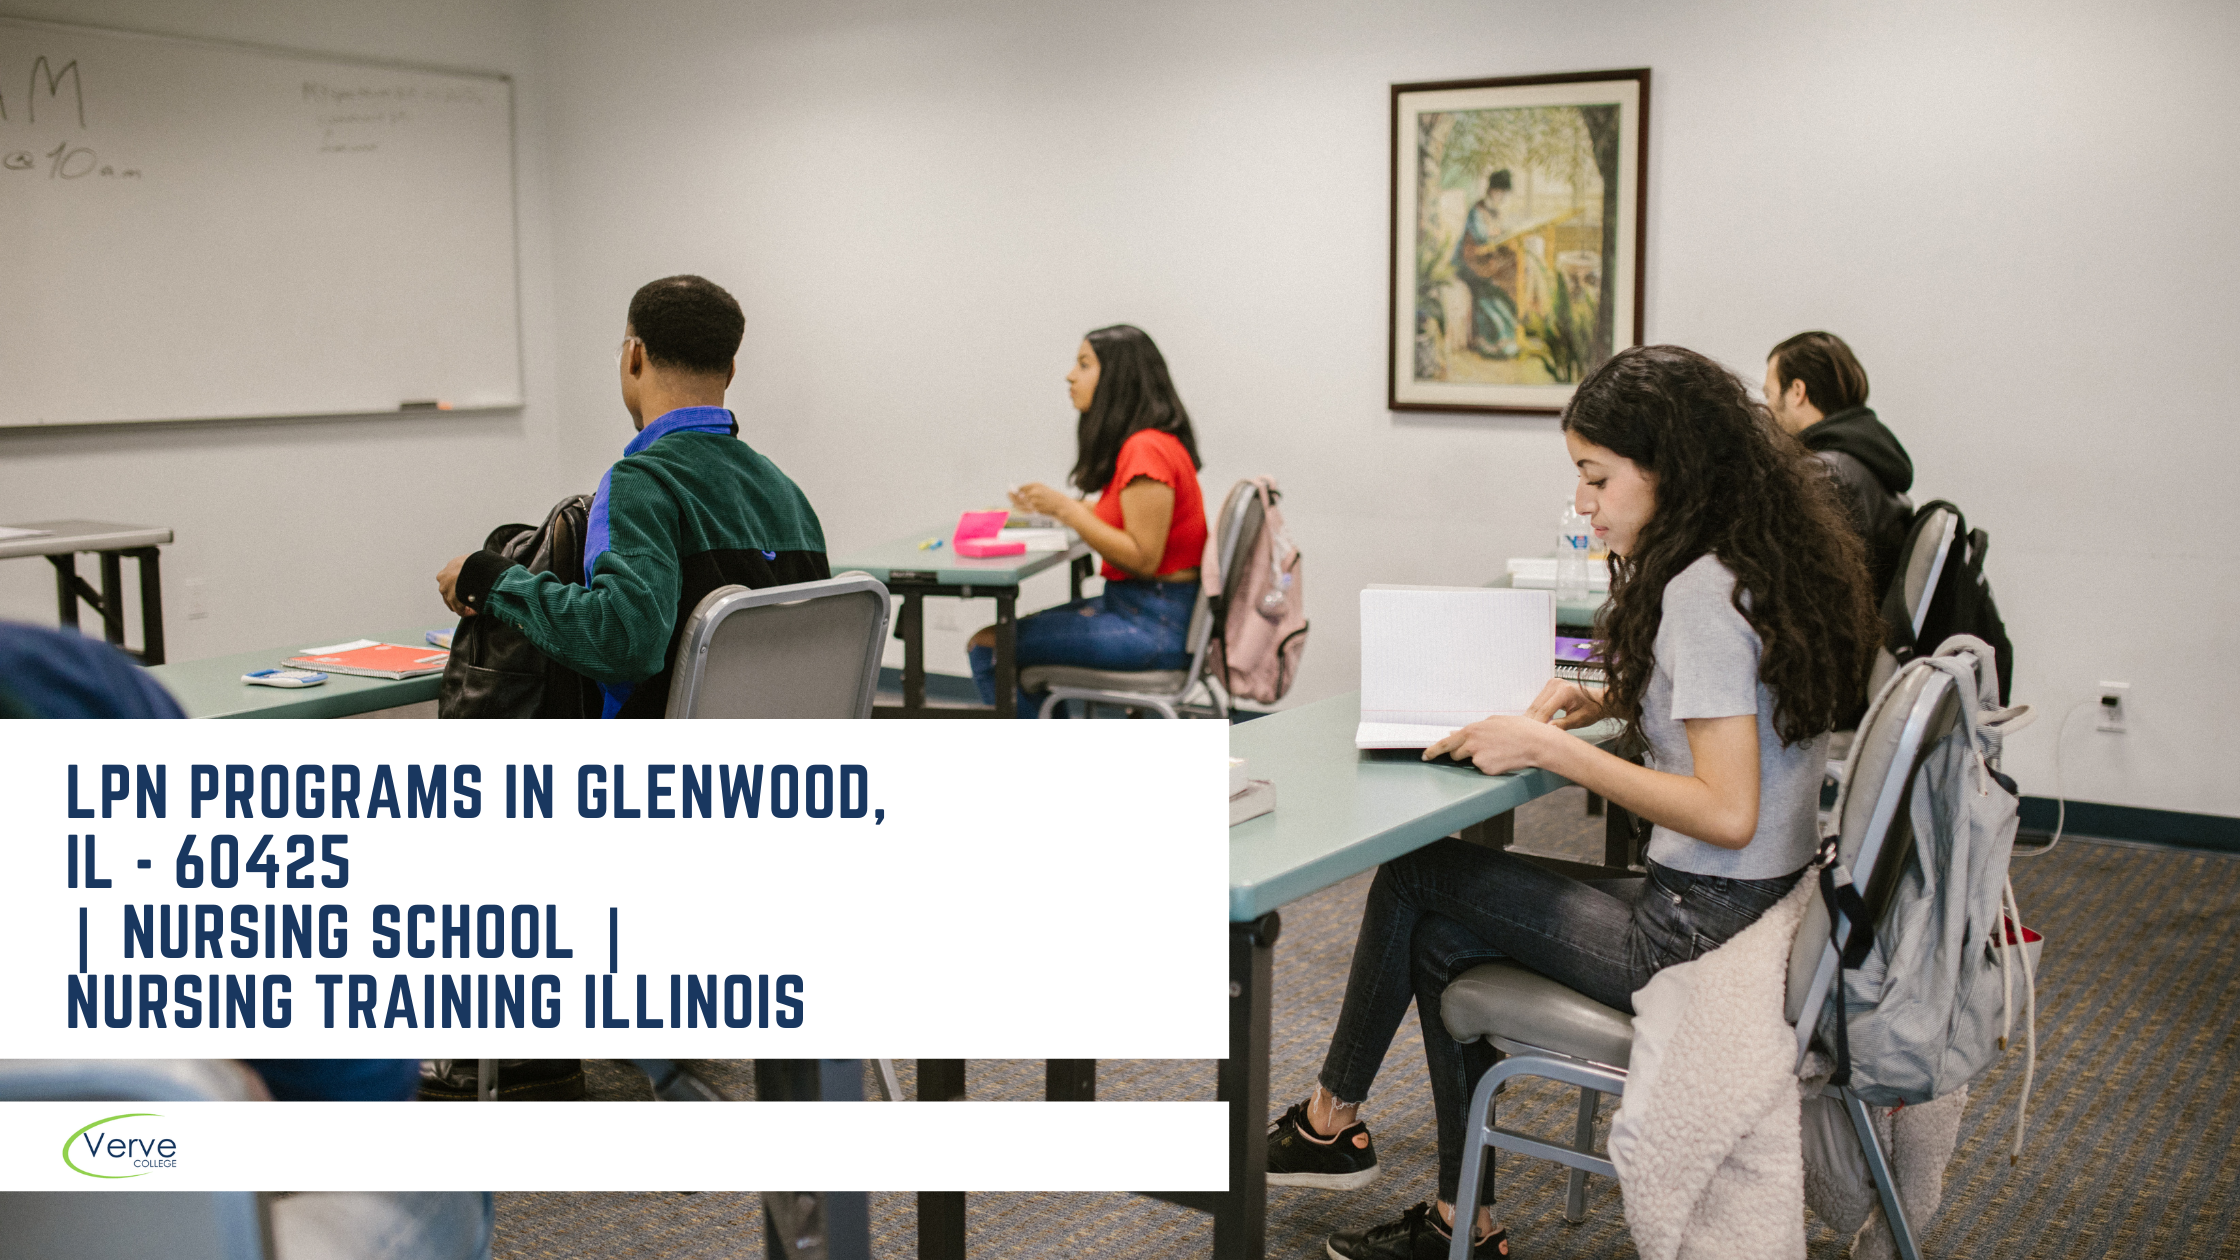 LPN Programs in Glenwood, IL – 60425 | Nursing School | Nursing Training Illinois